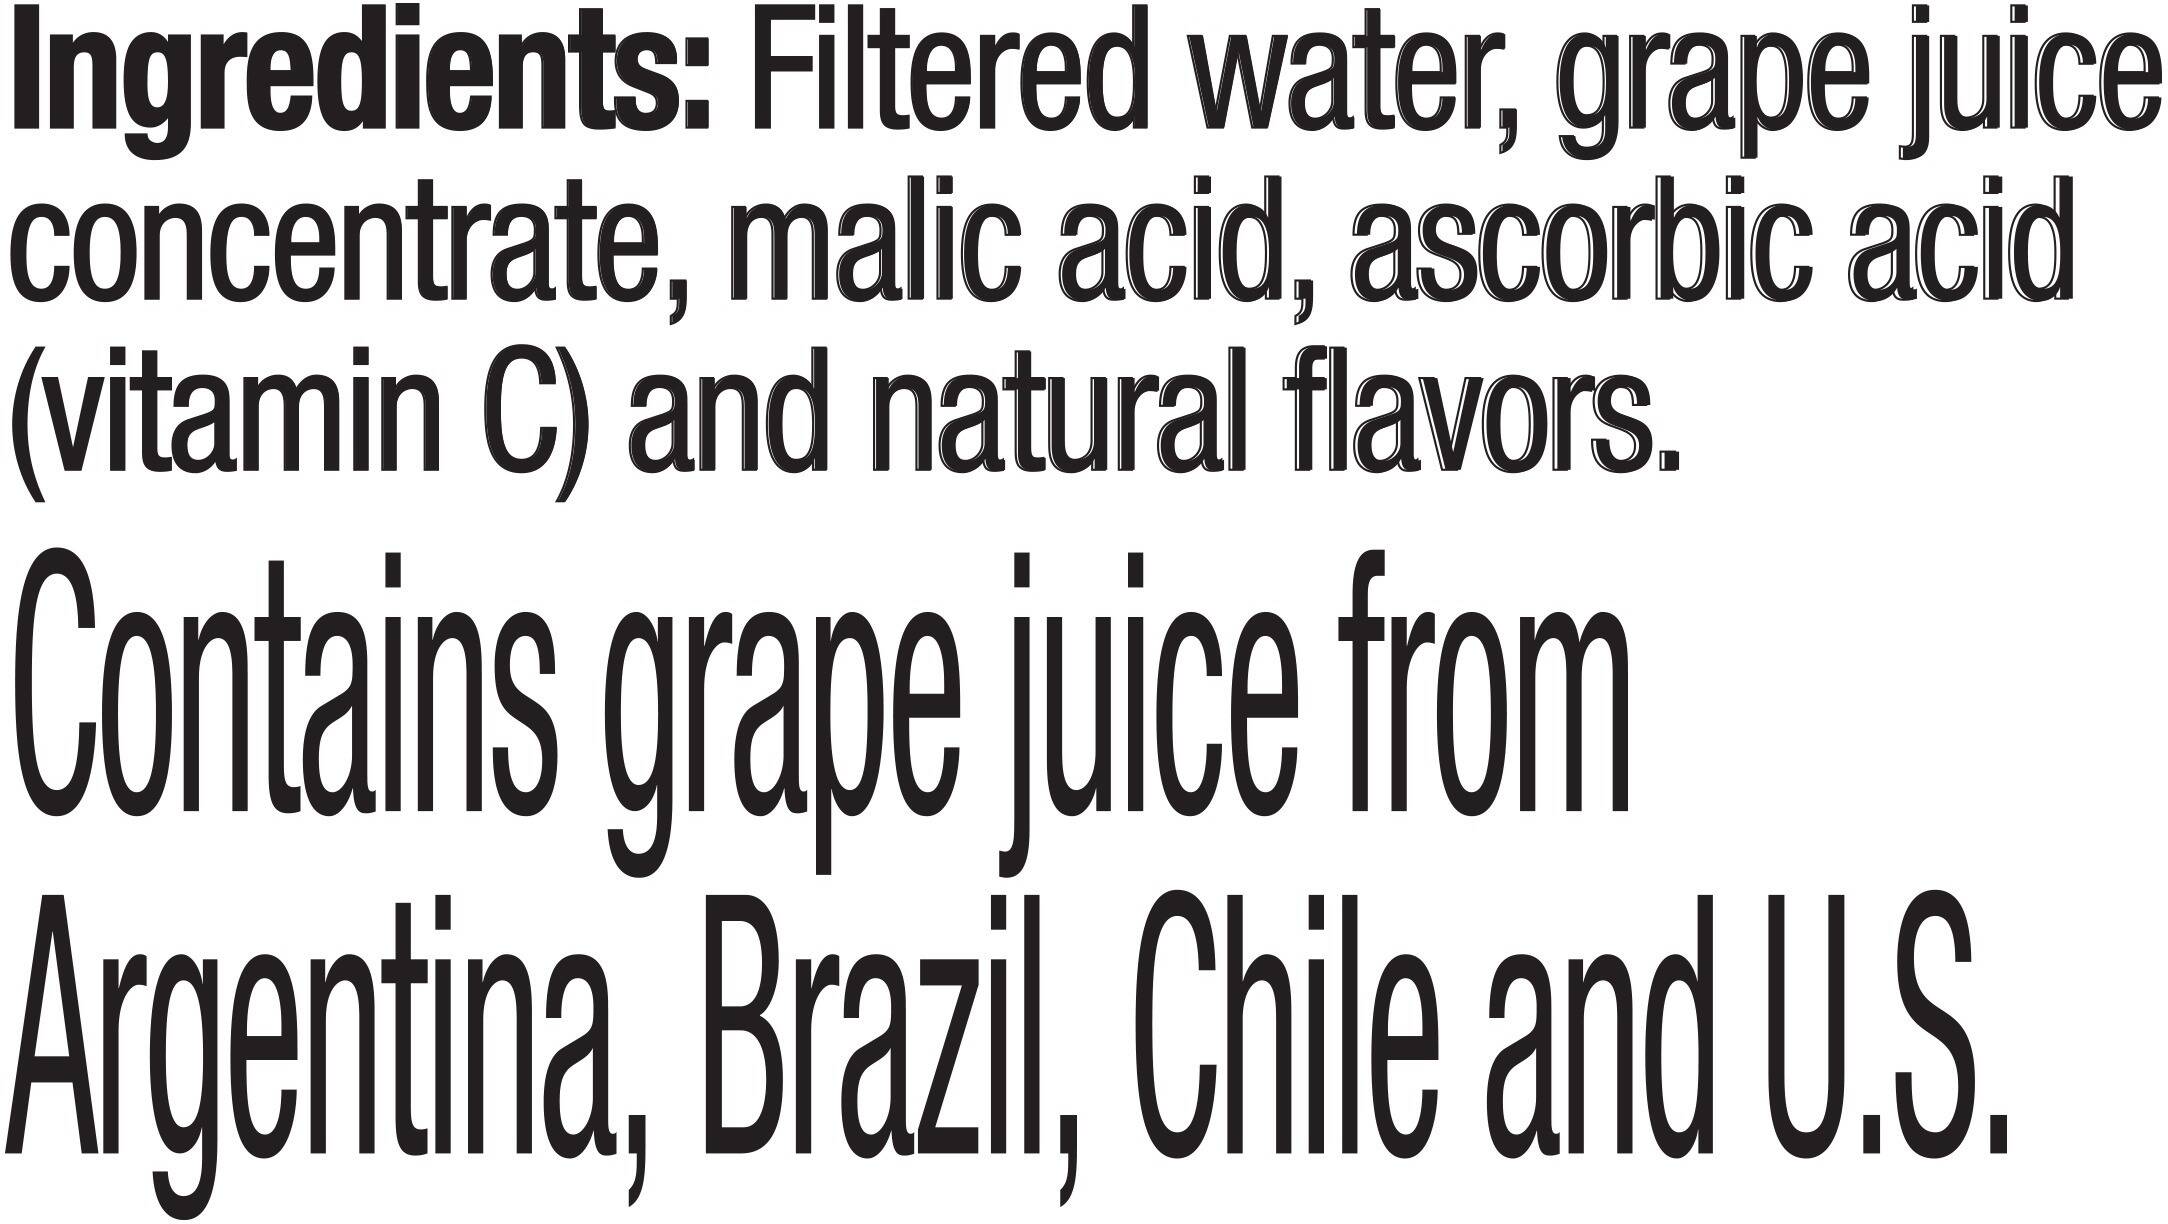 Image describing nutrition information for product Tropicana Pure Premium Grape Juice